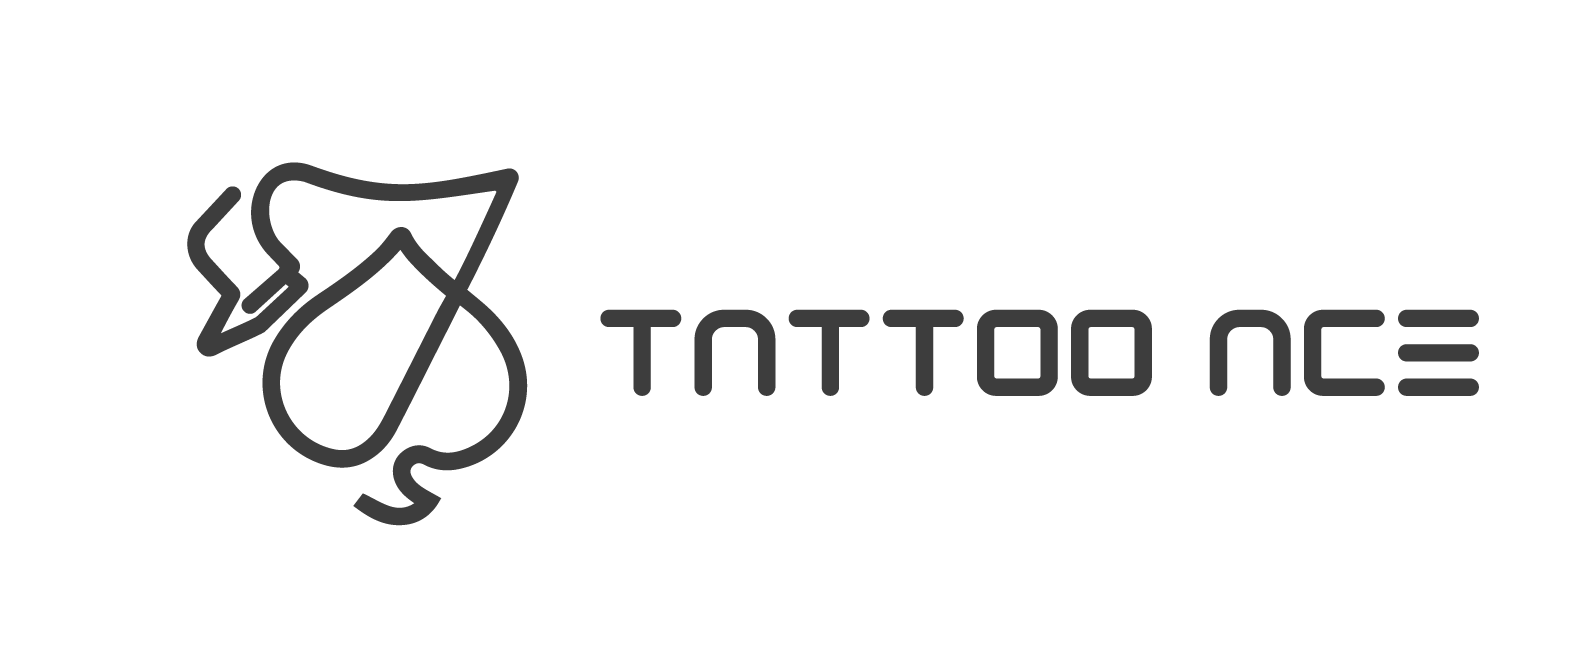 Tattooace-01